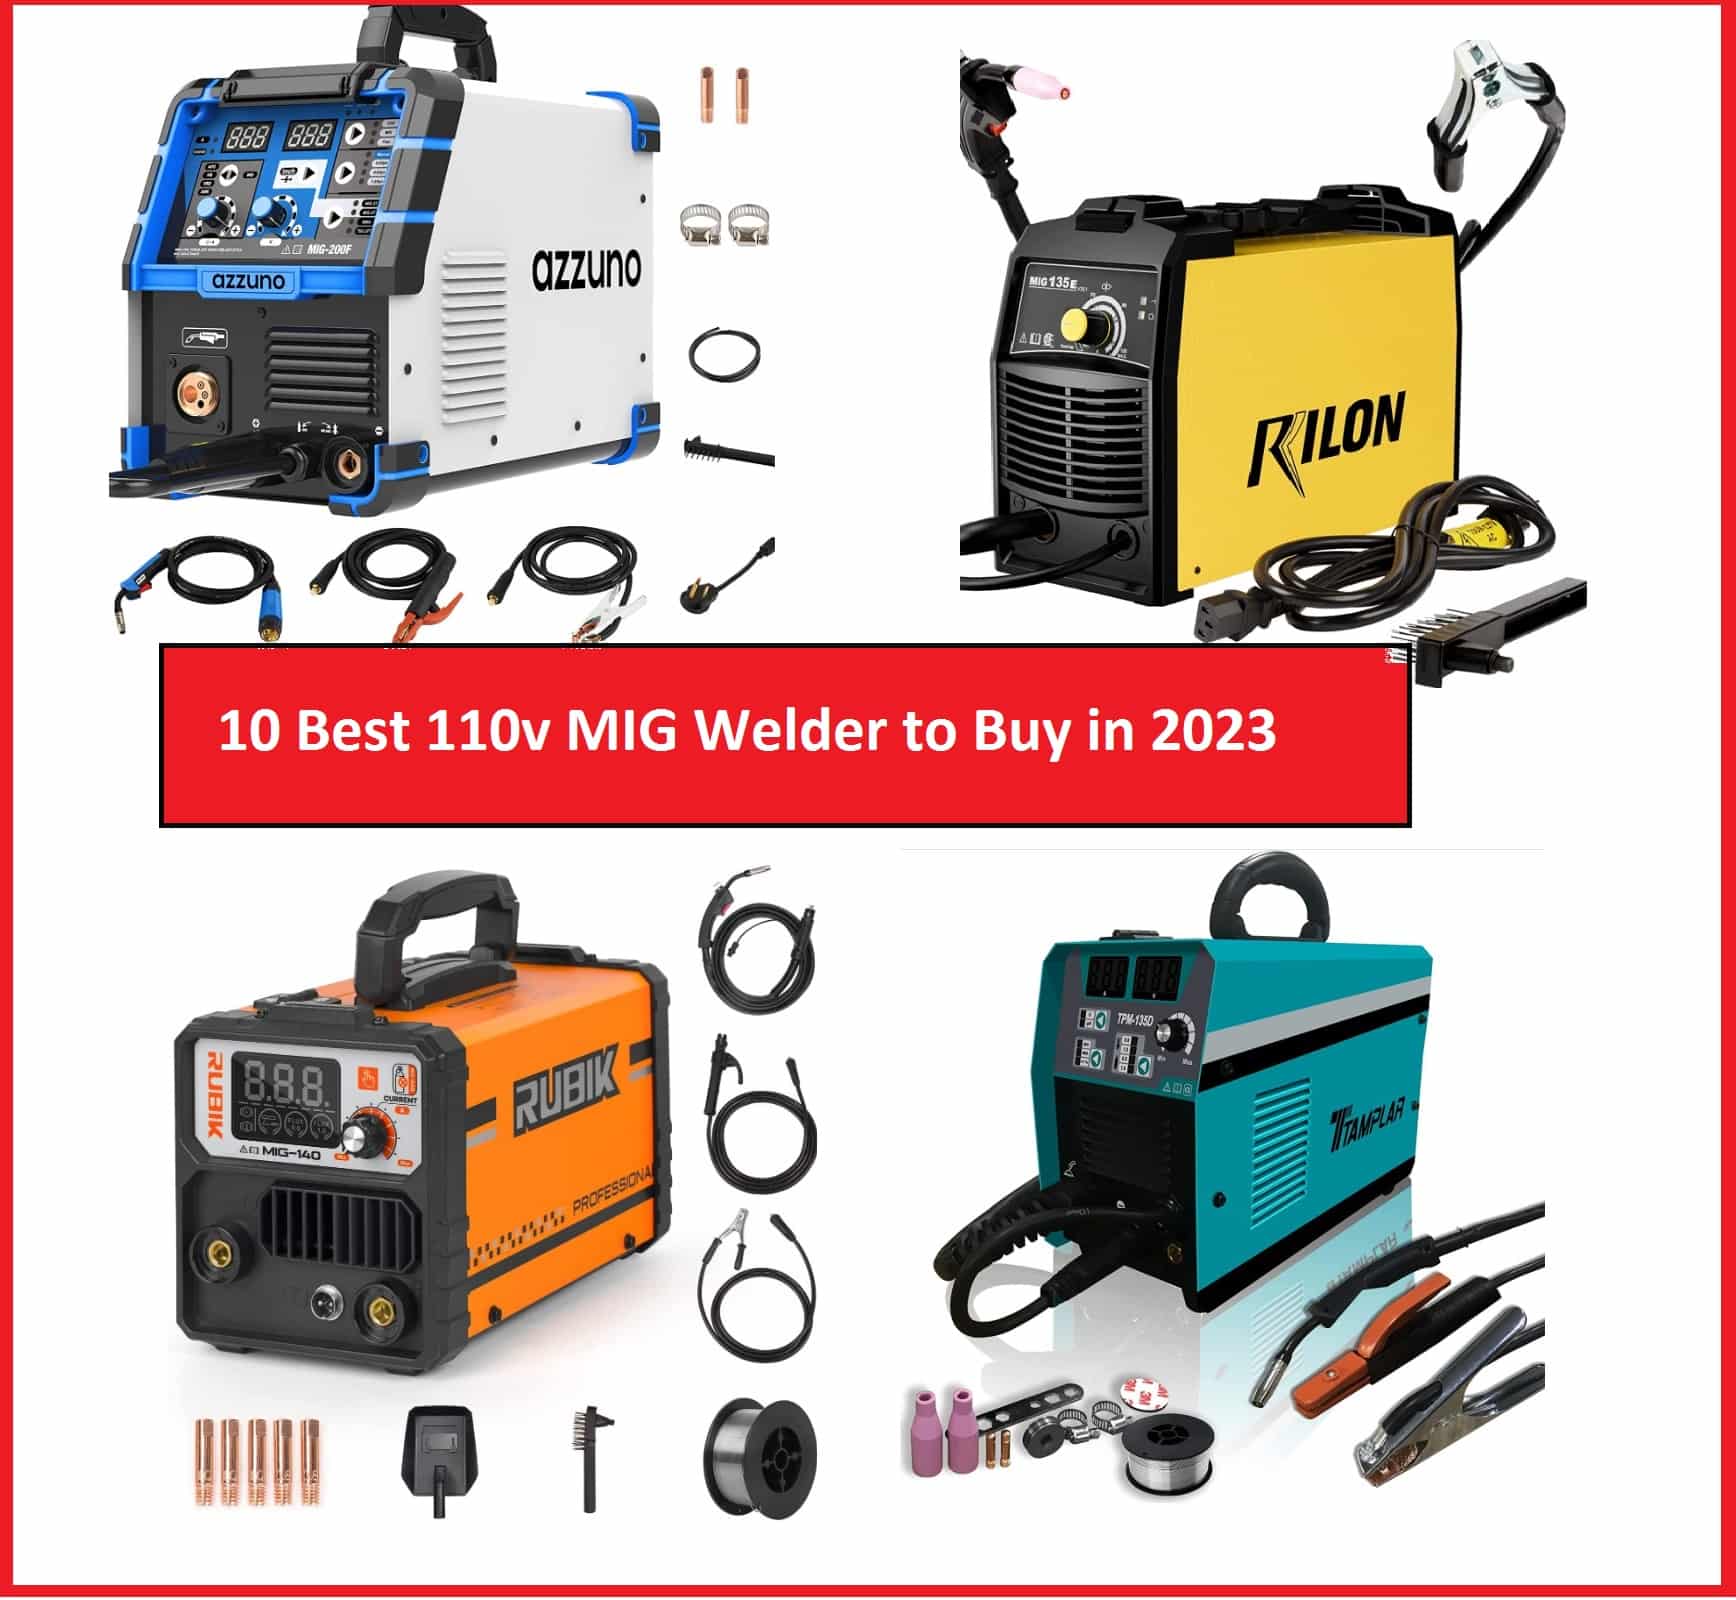 Best 110v MIG Welder to Buy in 2023 buying guide